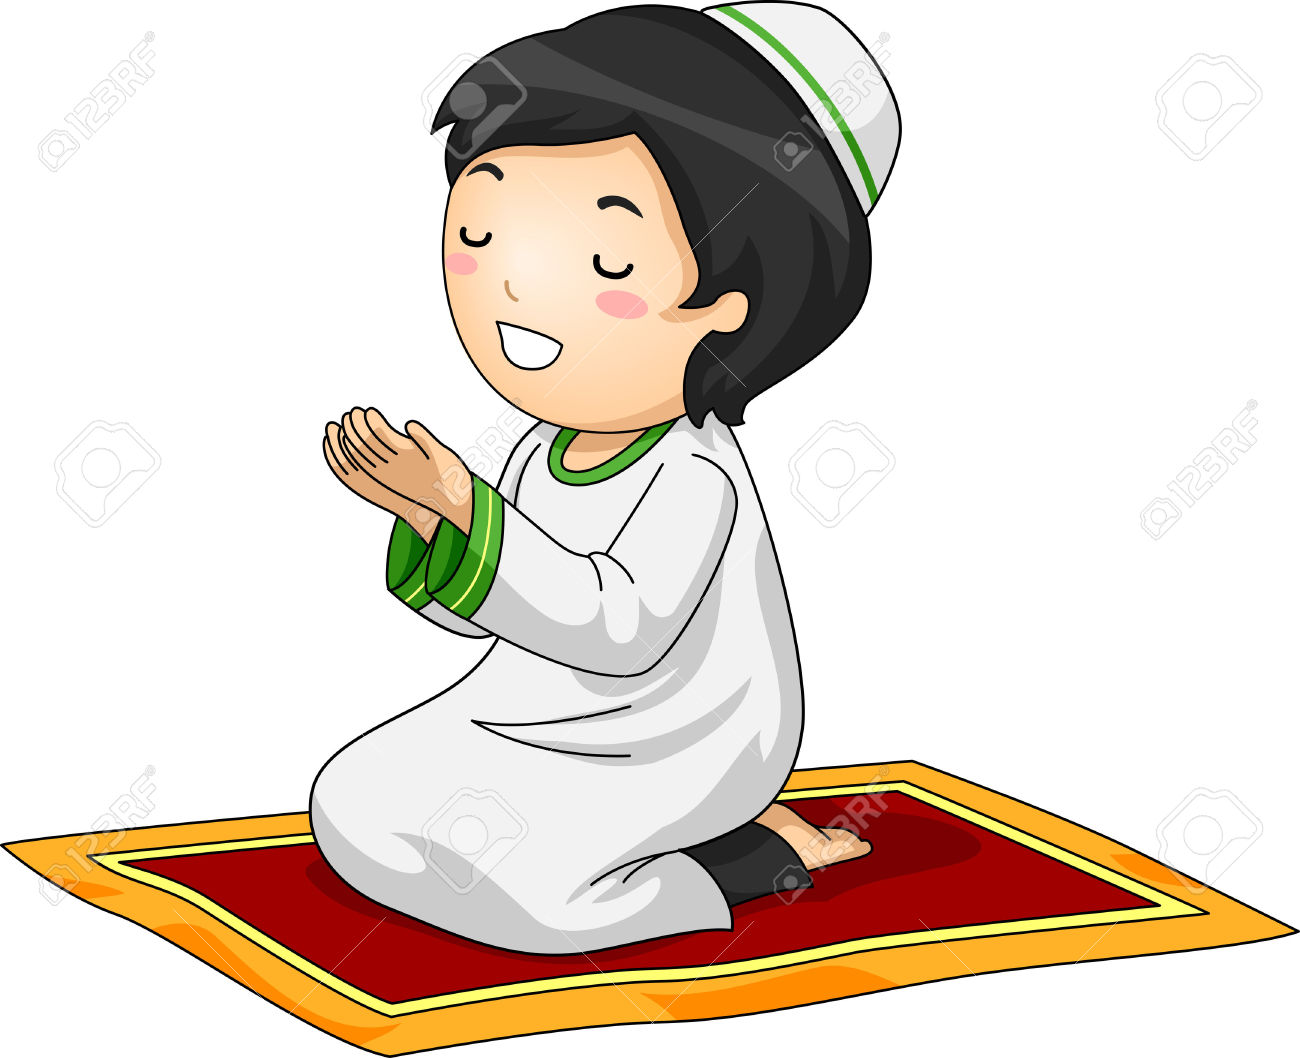 muslim praying clipart - Clipground